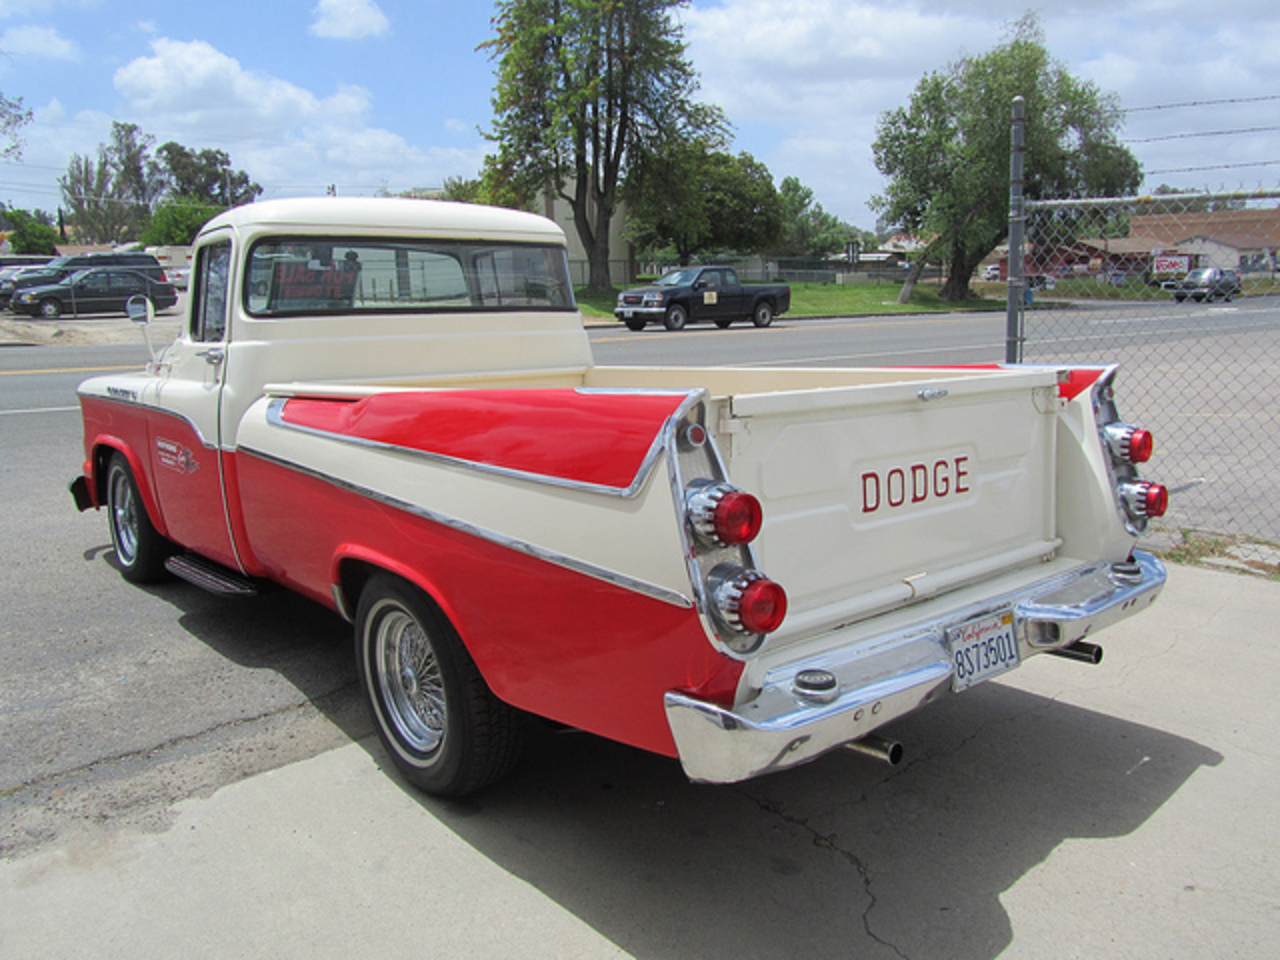 Dodge 100 Sweptside Pickup Truck - 1958